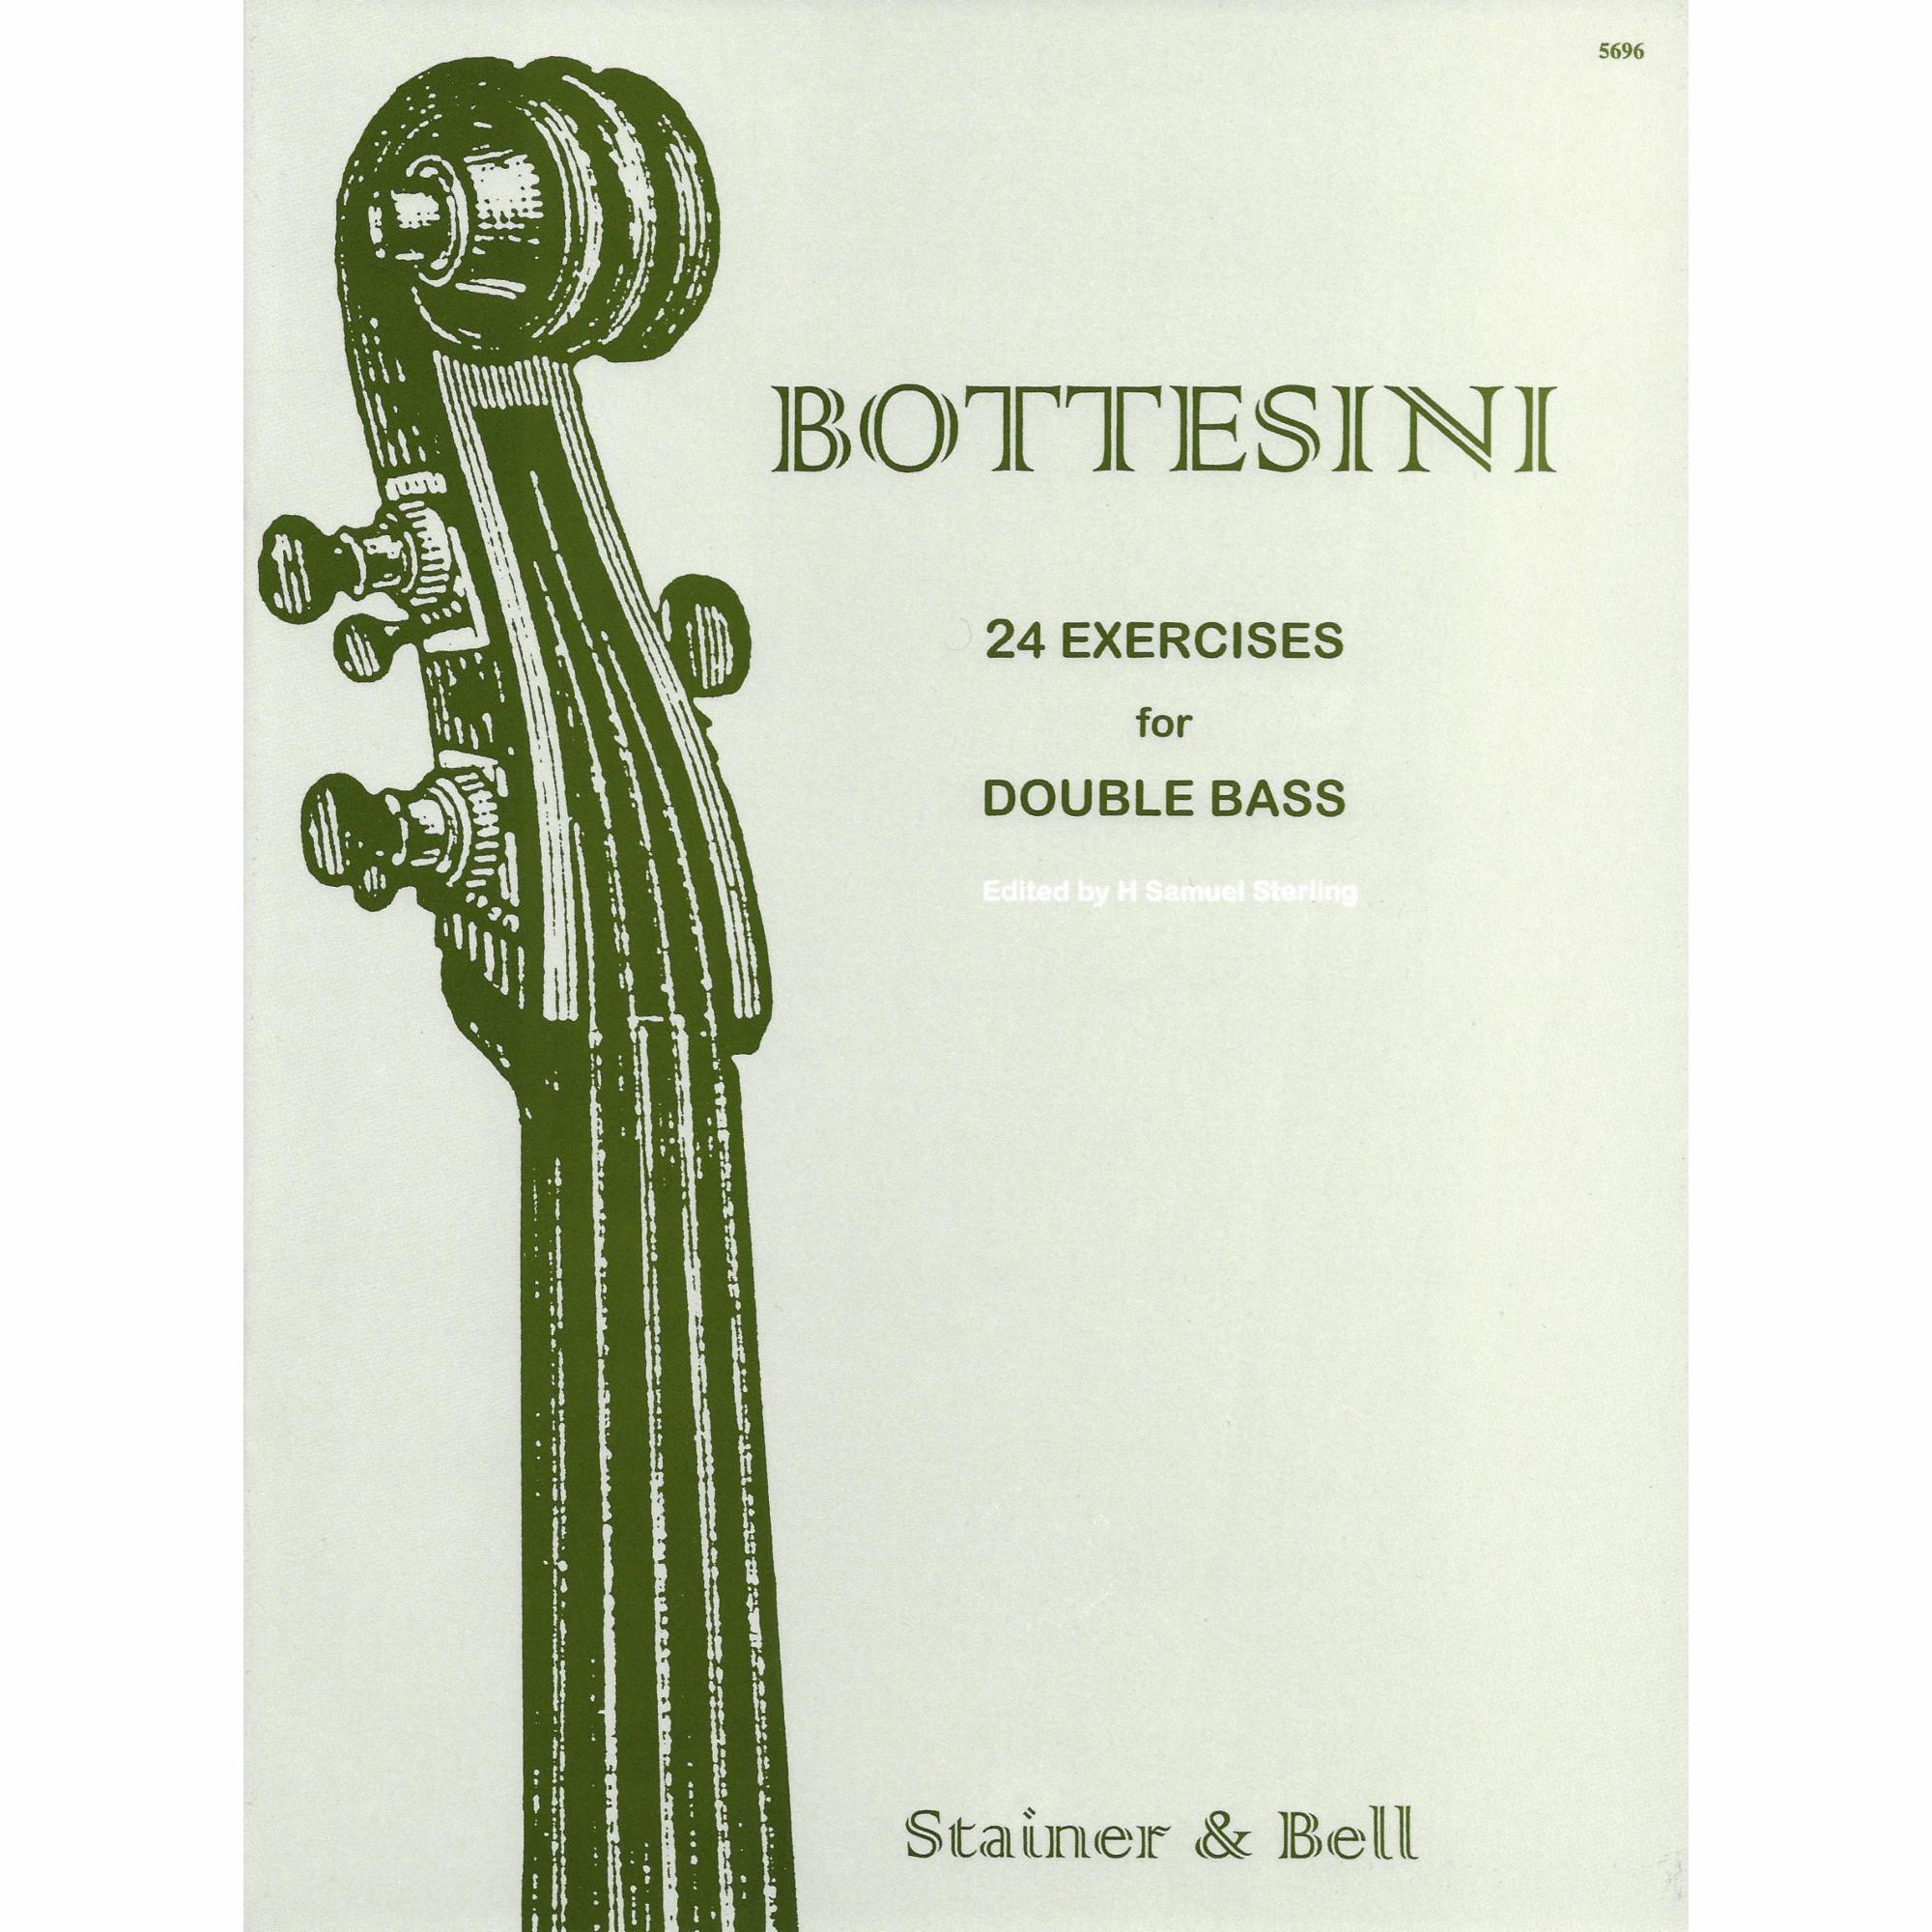 Bottesini -- 24 Exercises for Double Bass